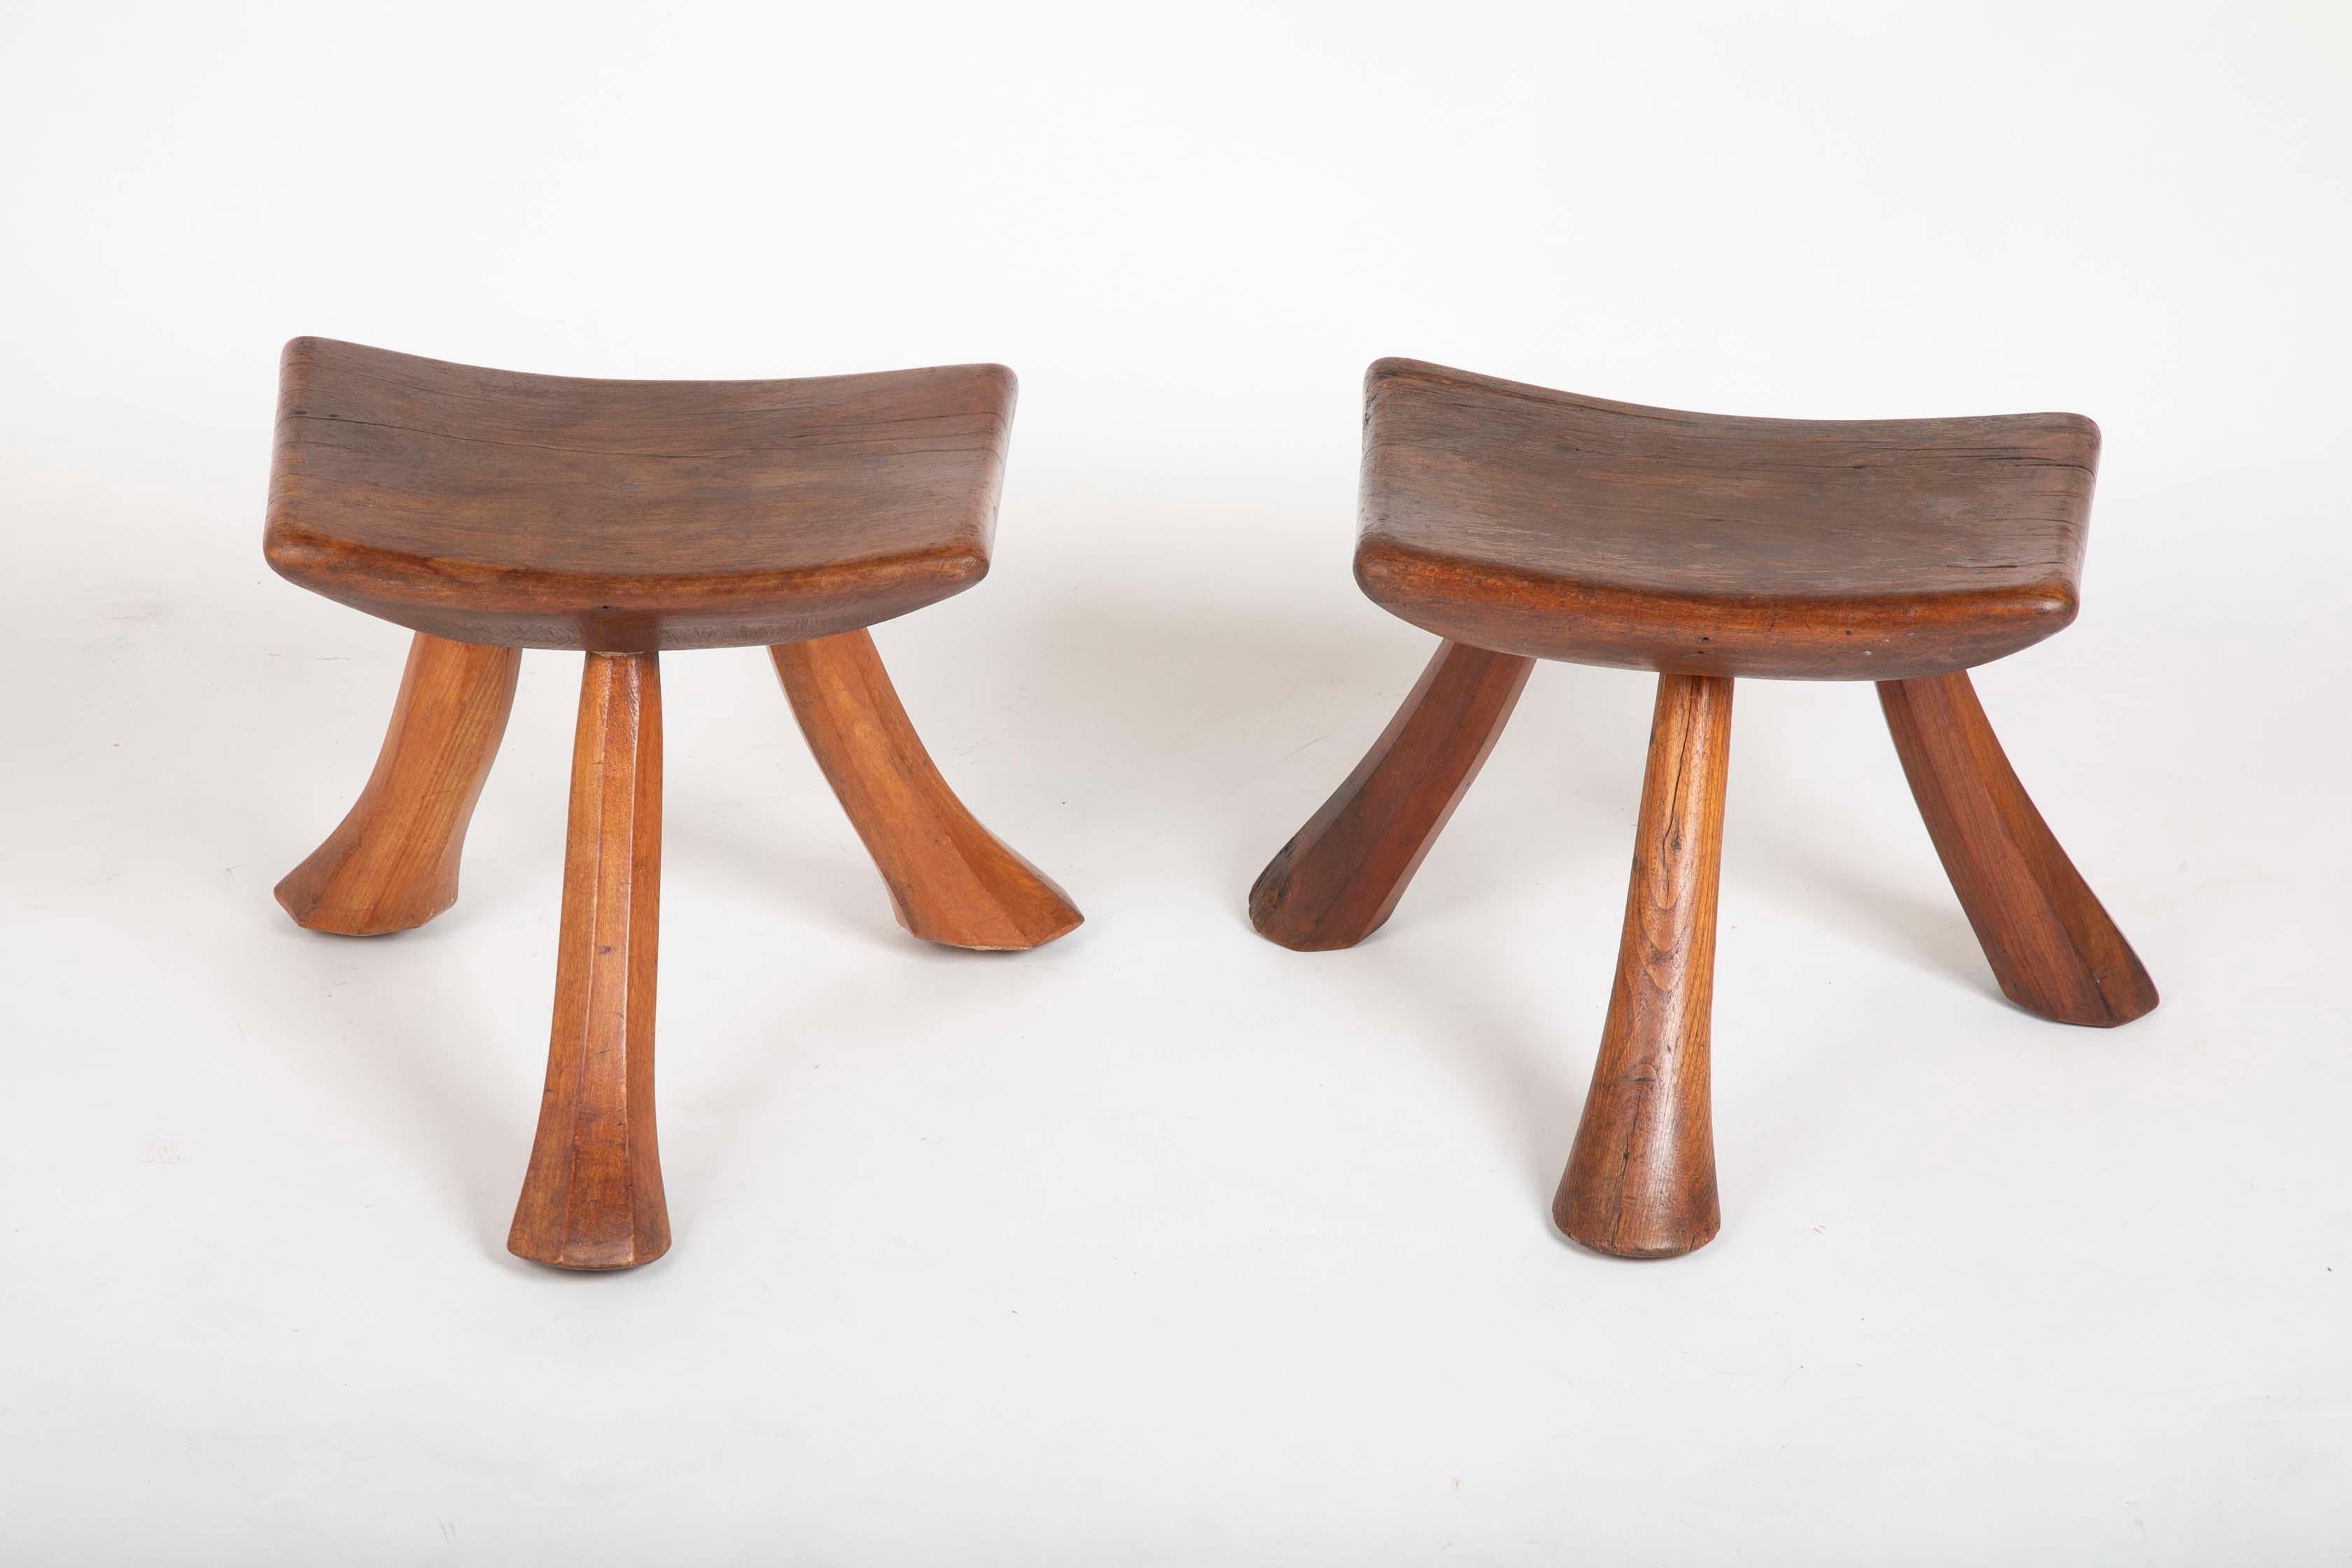 A pair of three-legged Maple stools with wonderful patina.